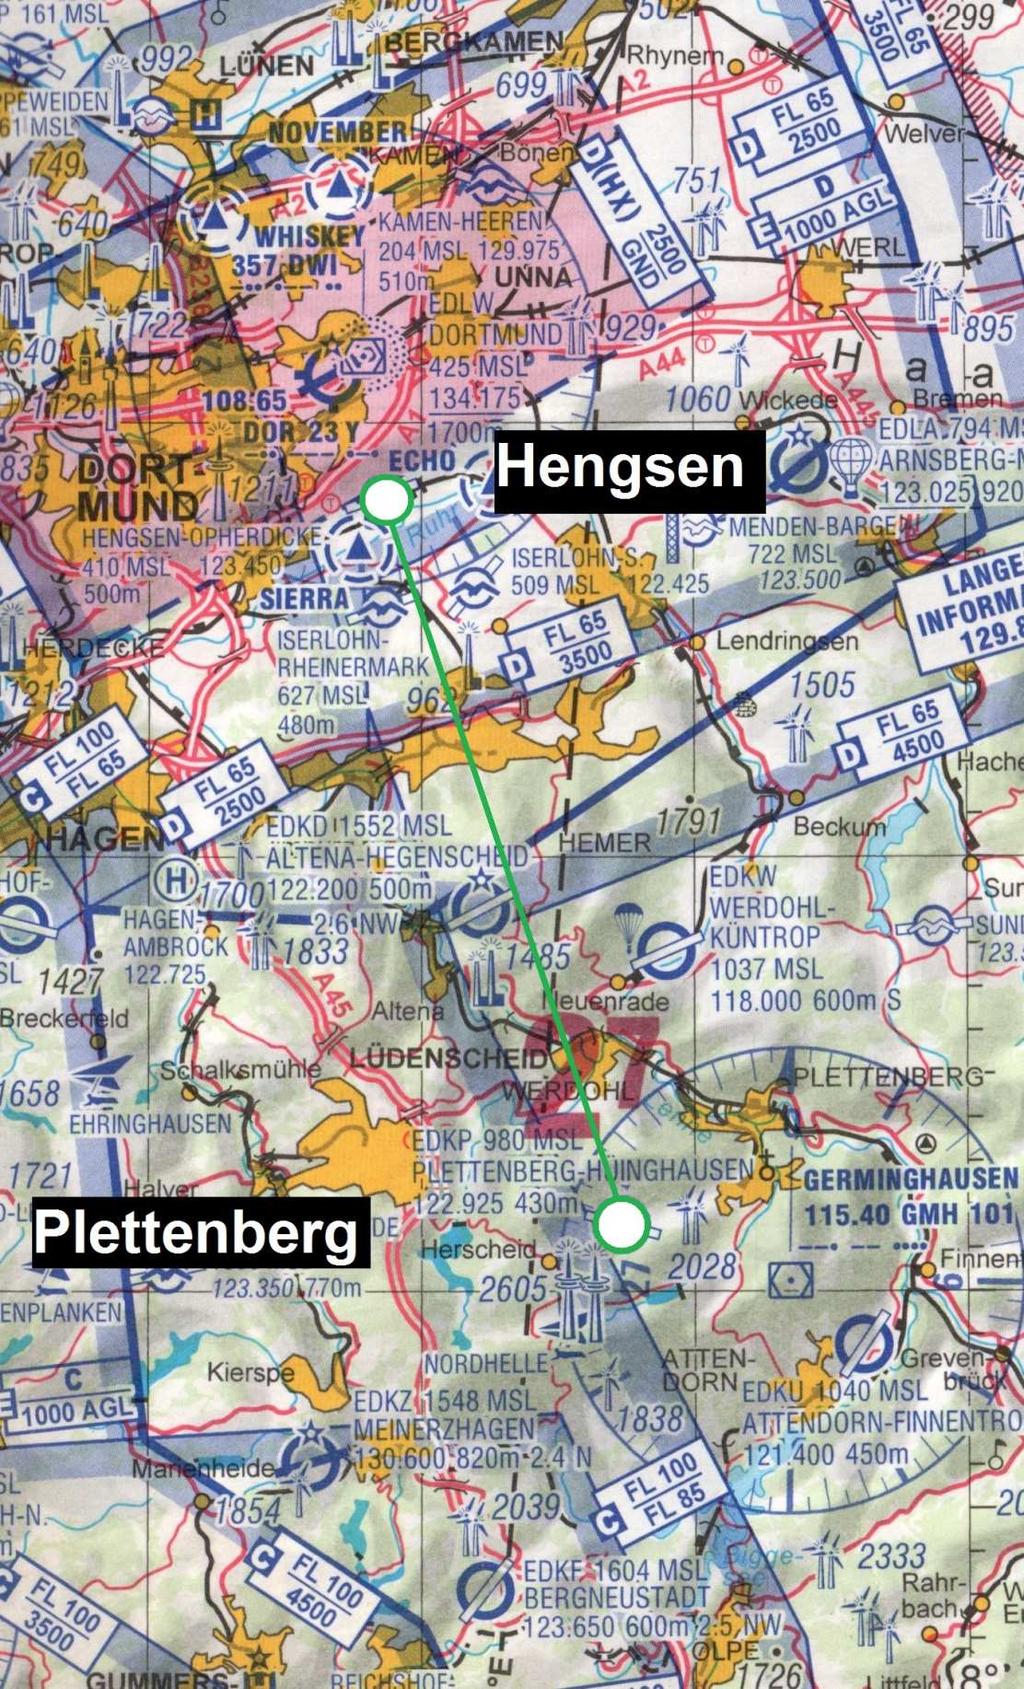 Hengsen Plettenberg (Flugplatz) Hengsen Gesamtstrecke Hin und